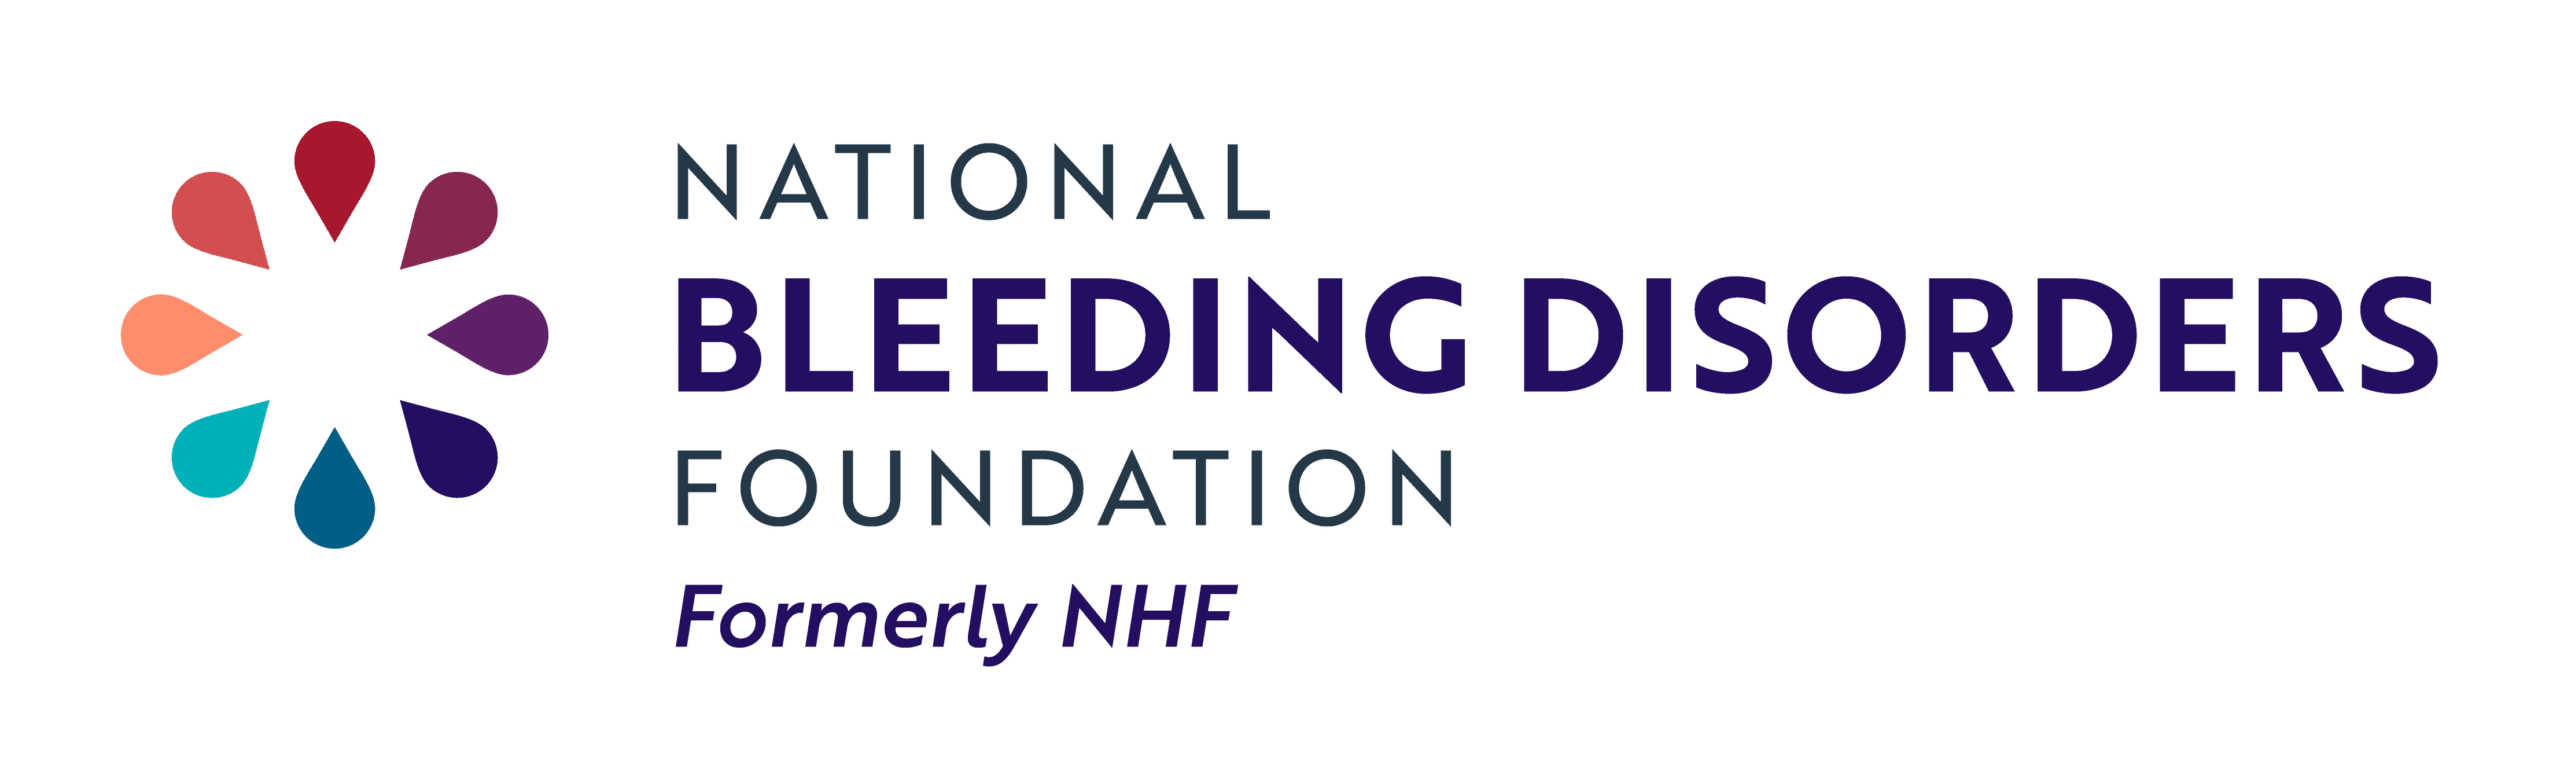 National Bleeding Disorders Foundation on Instagram: Washington